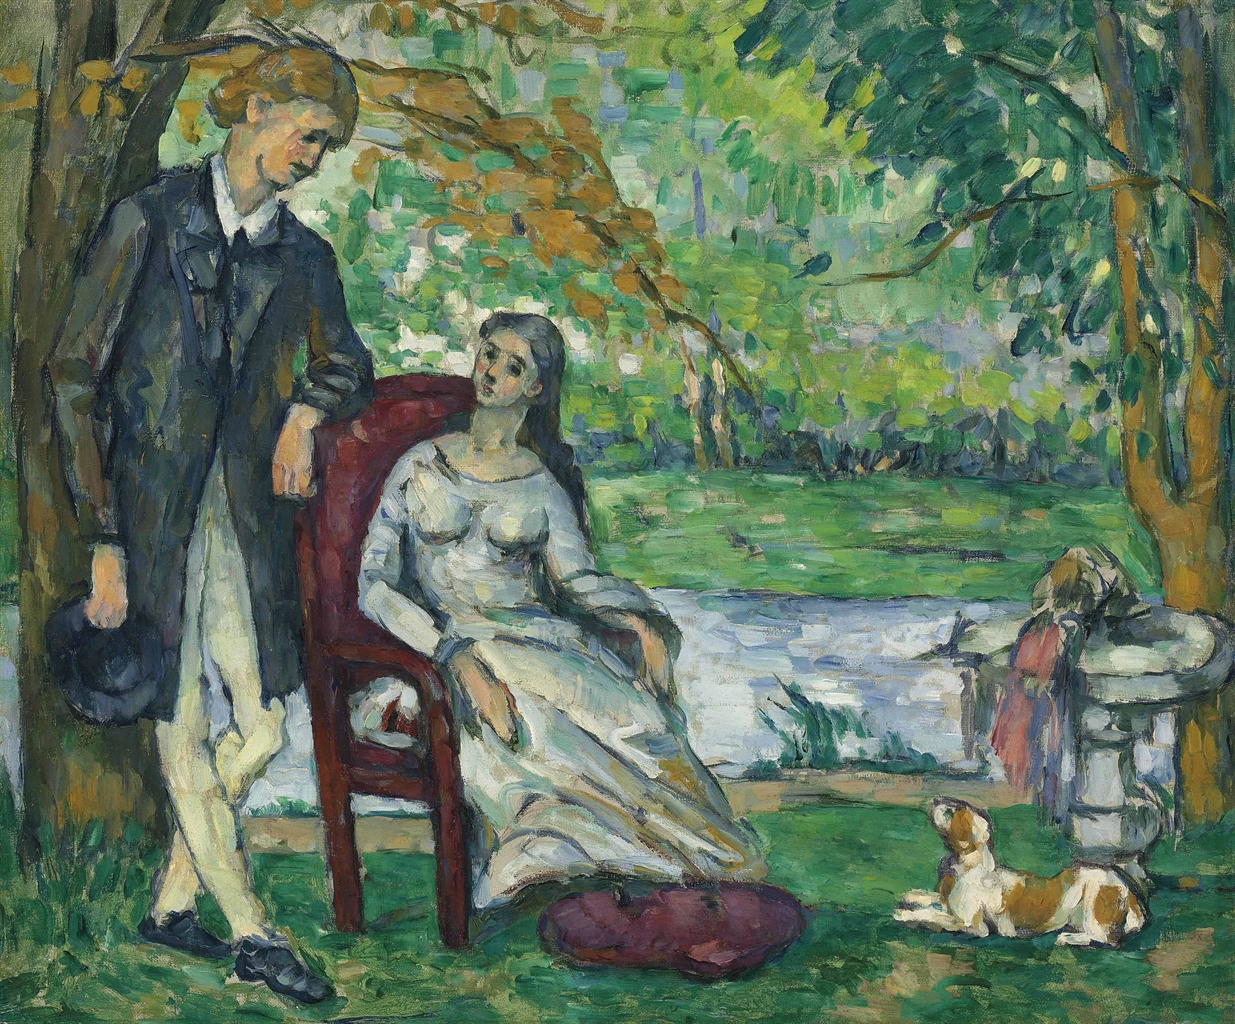 Paul+Cezanne-1839-1906 (102).jpg